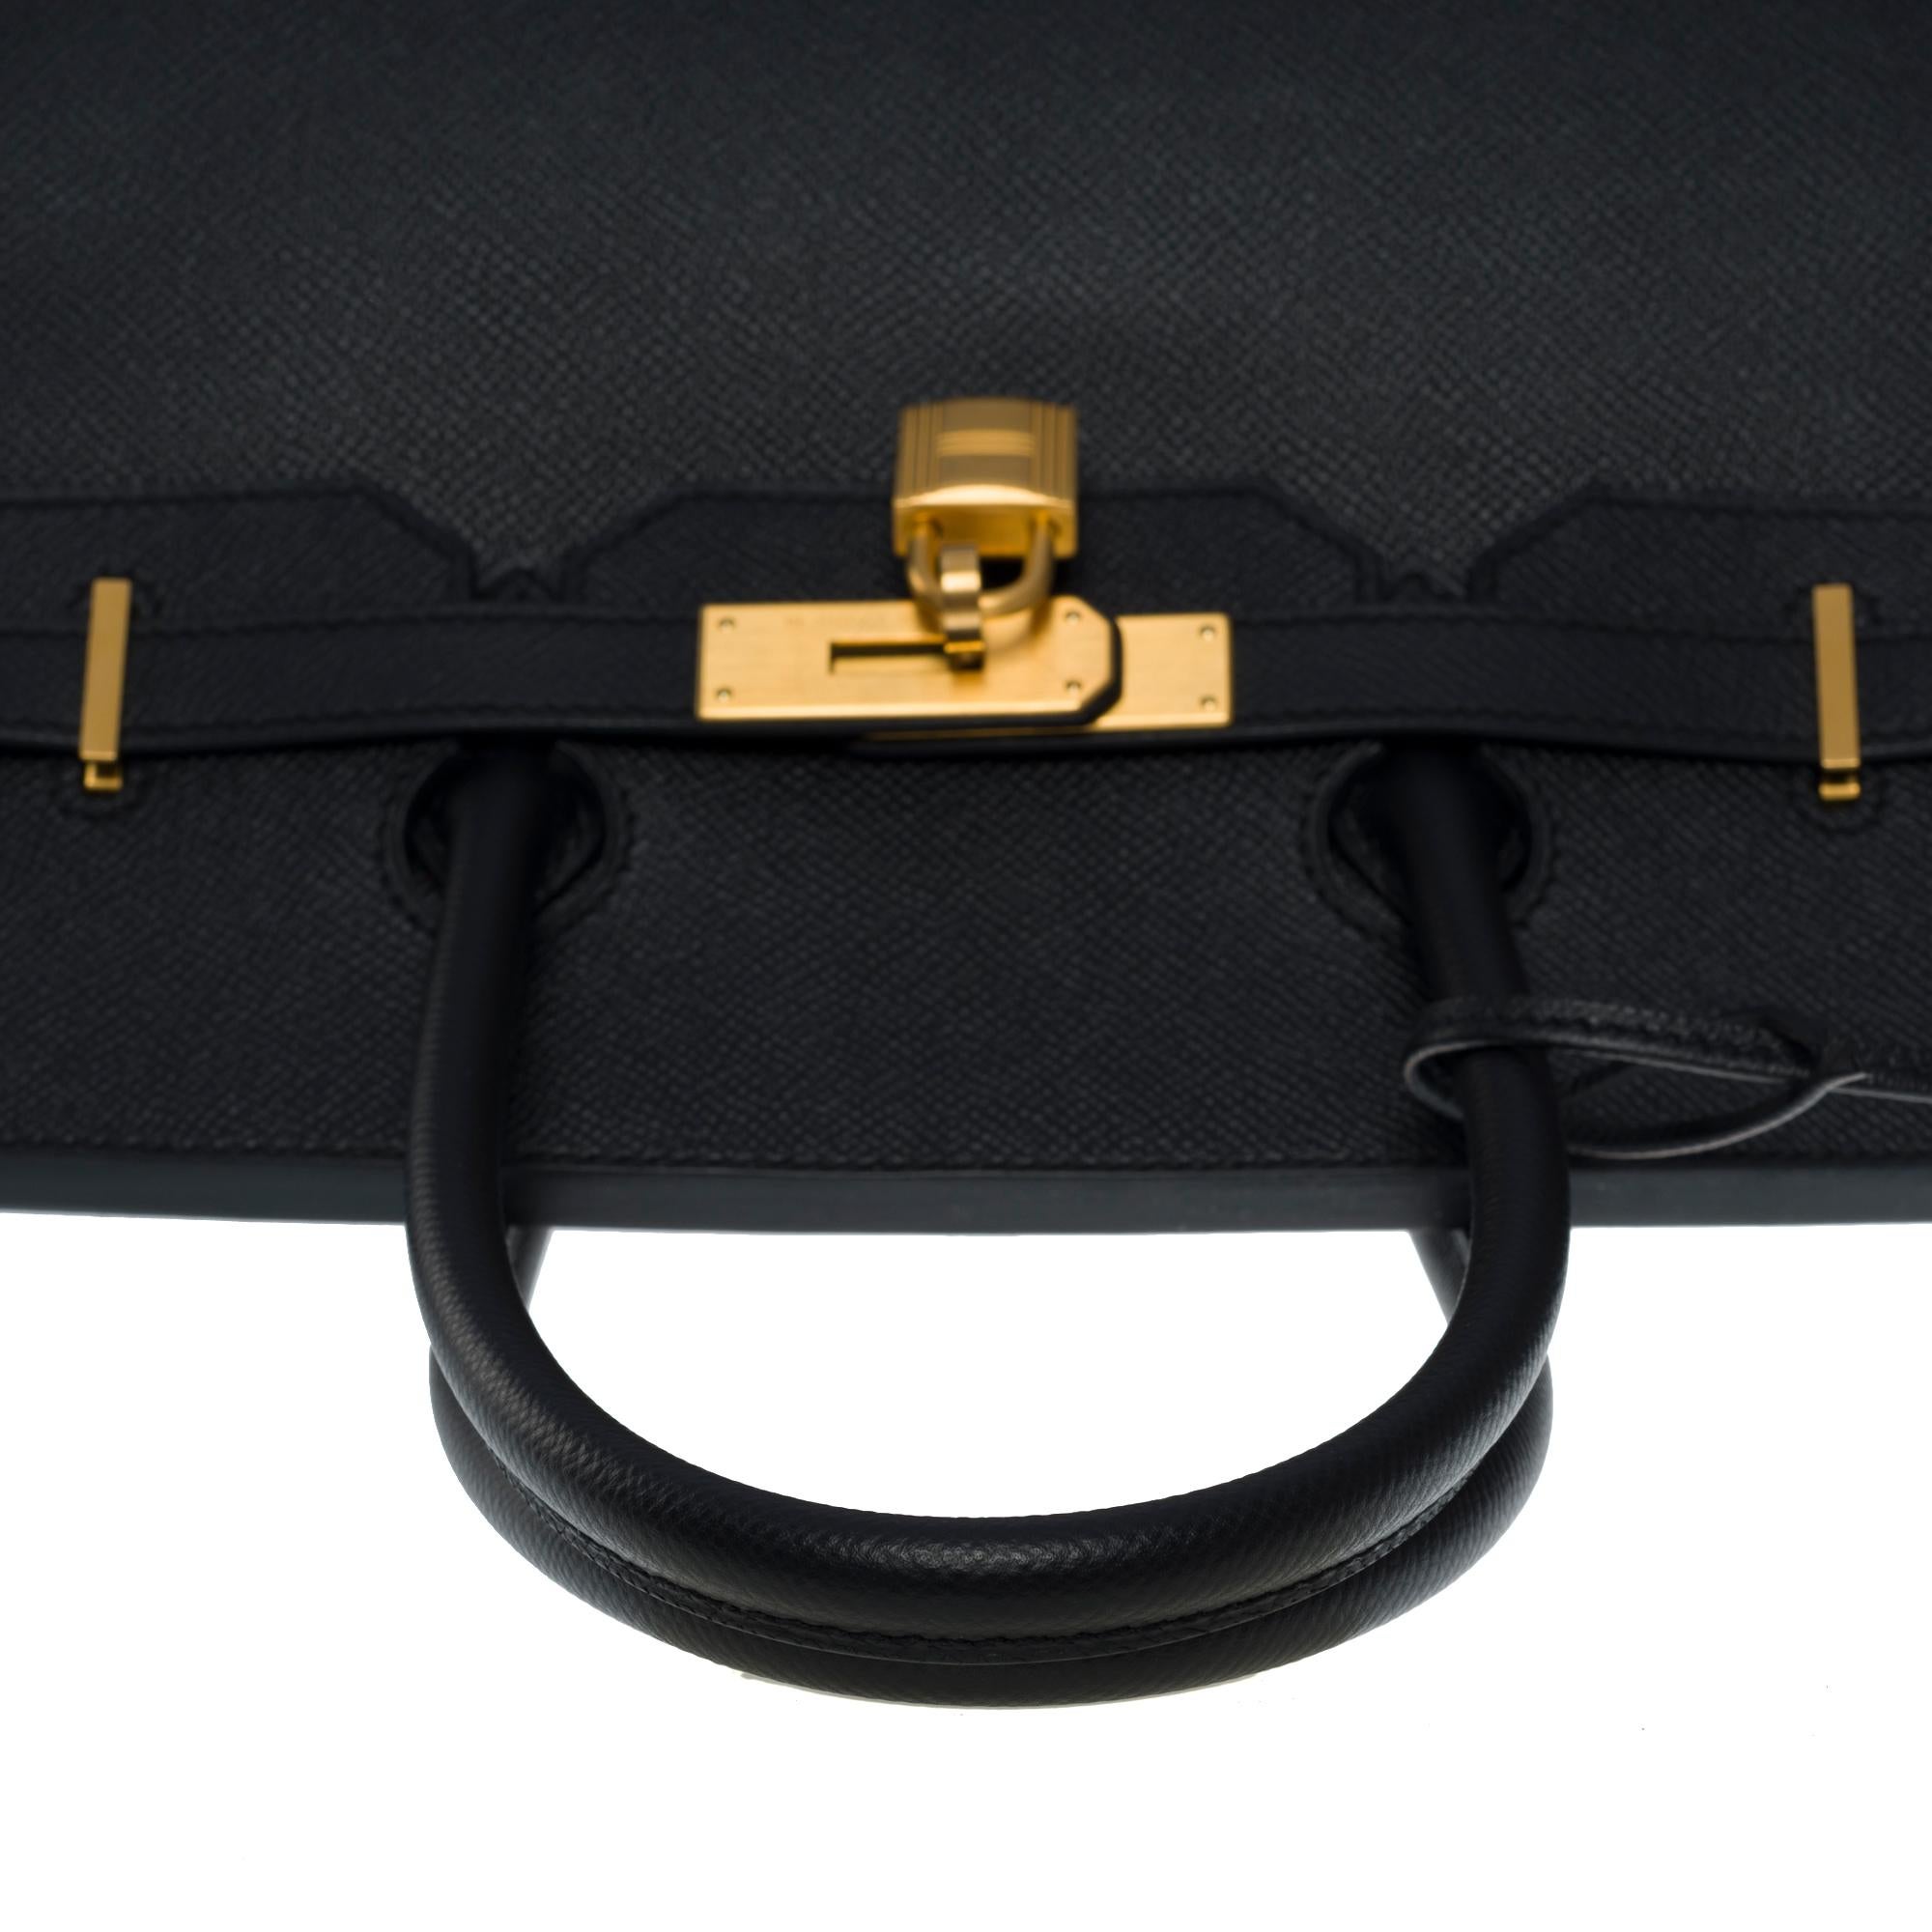 Rare Hermès Birkin 35 HSS (Special Order) handbag in black epsom leather, BGHW 4